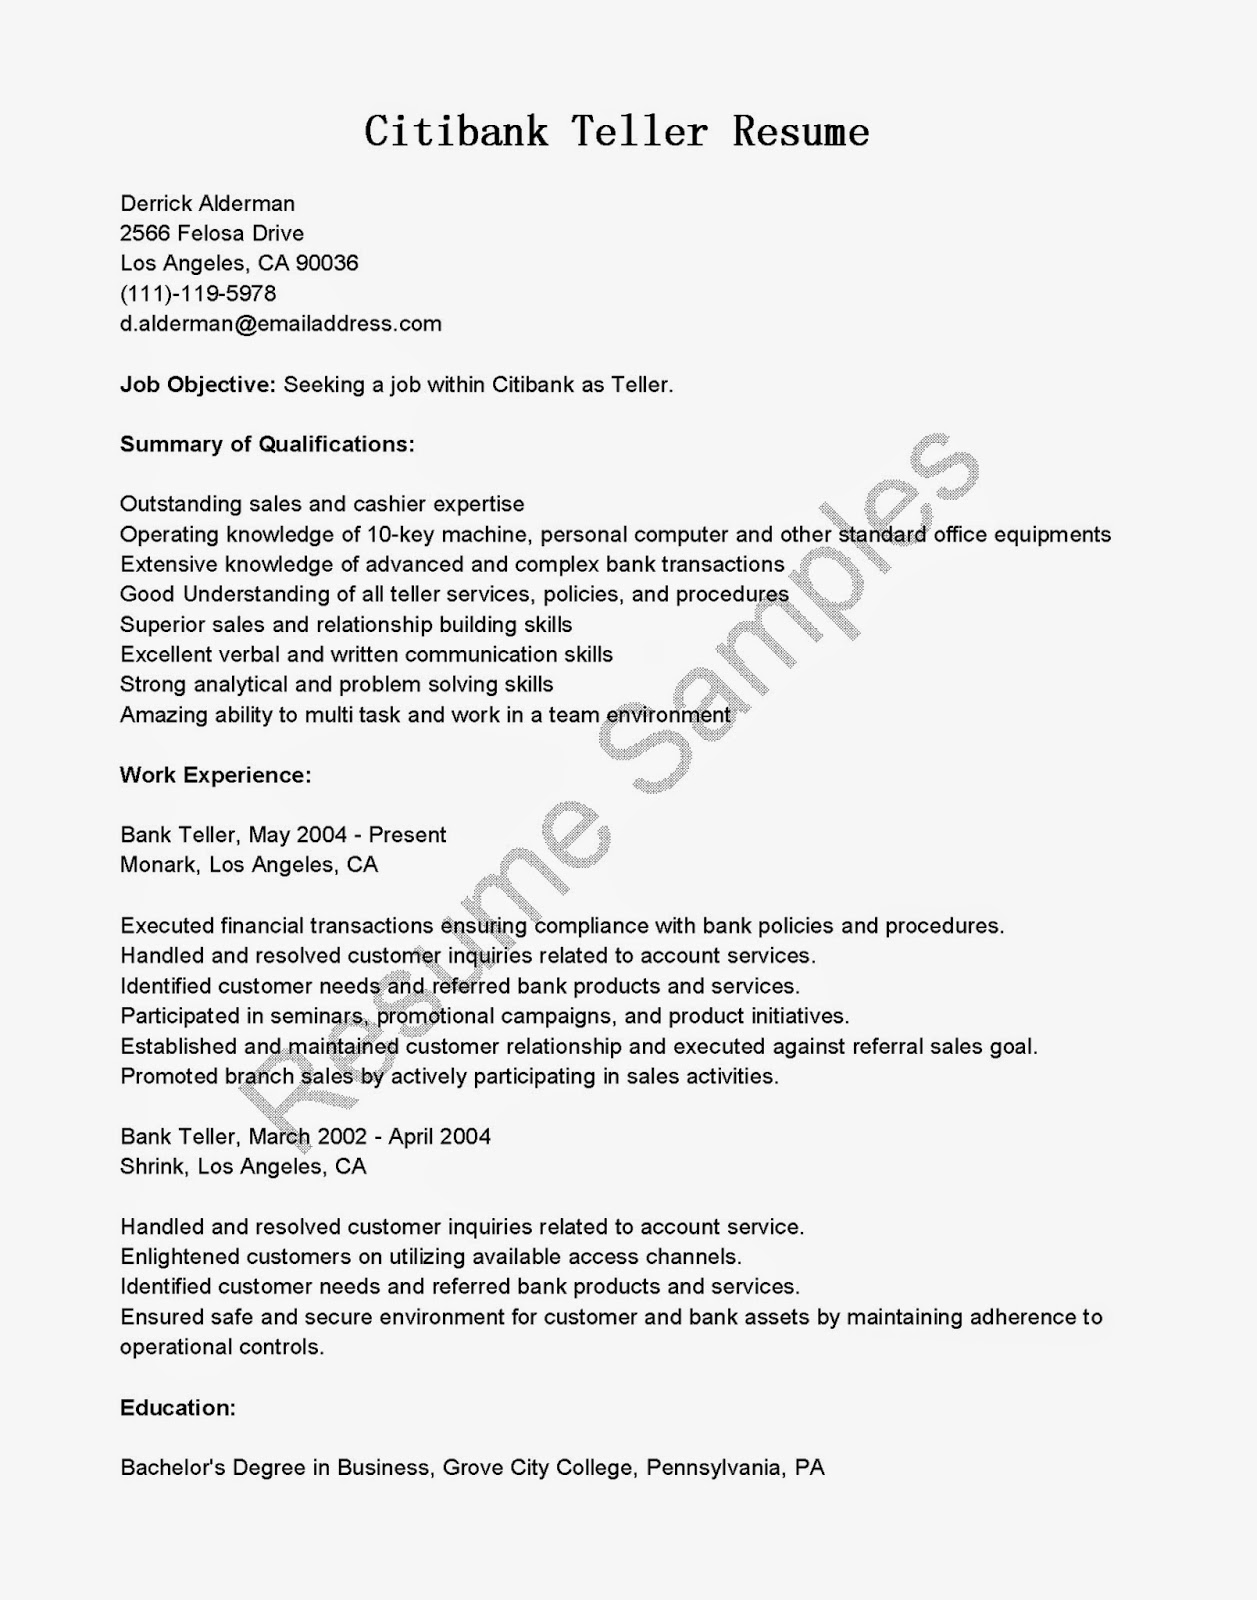 Entry level bank teller resume templates